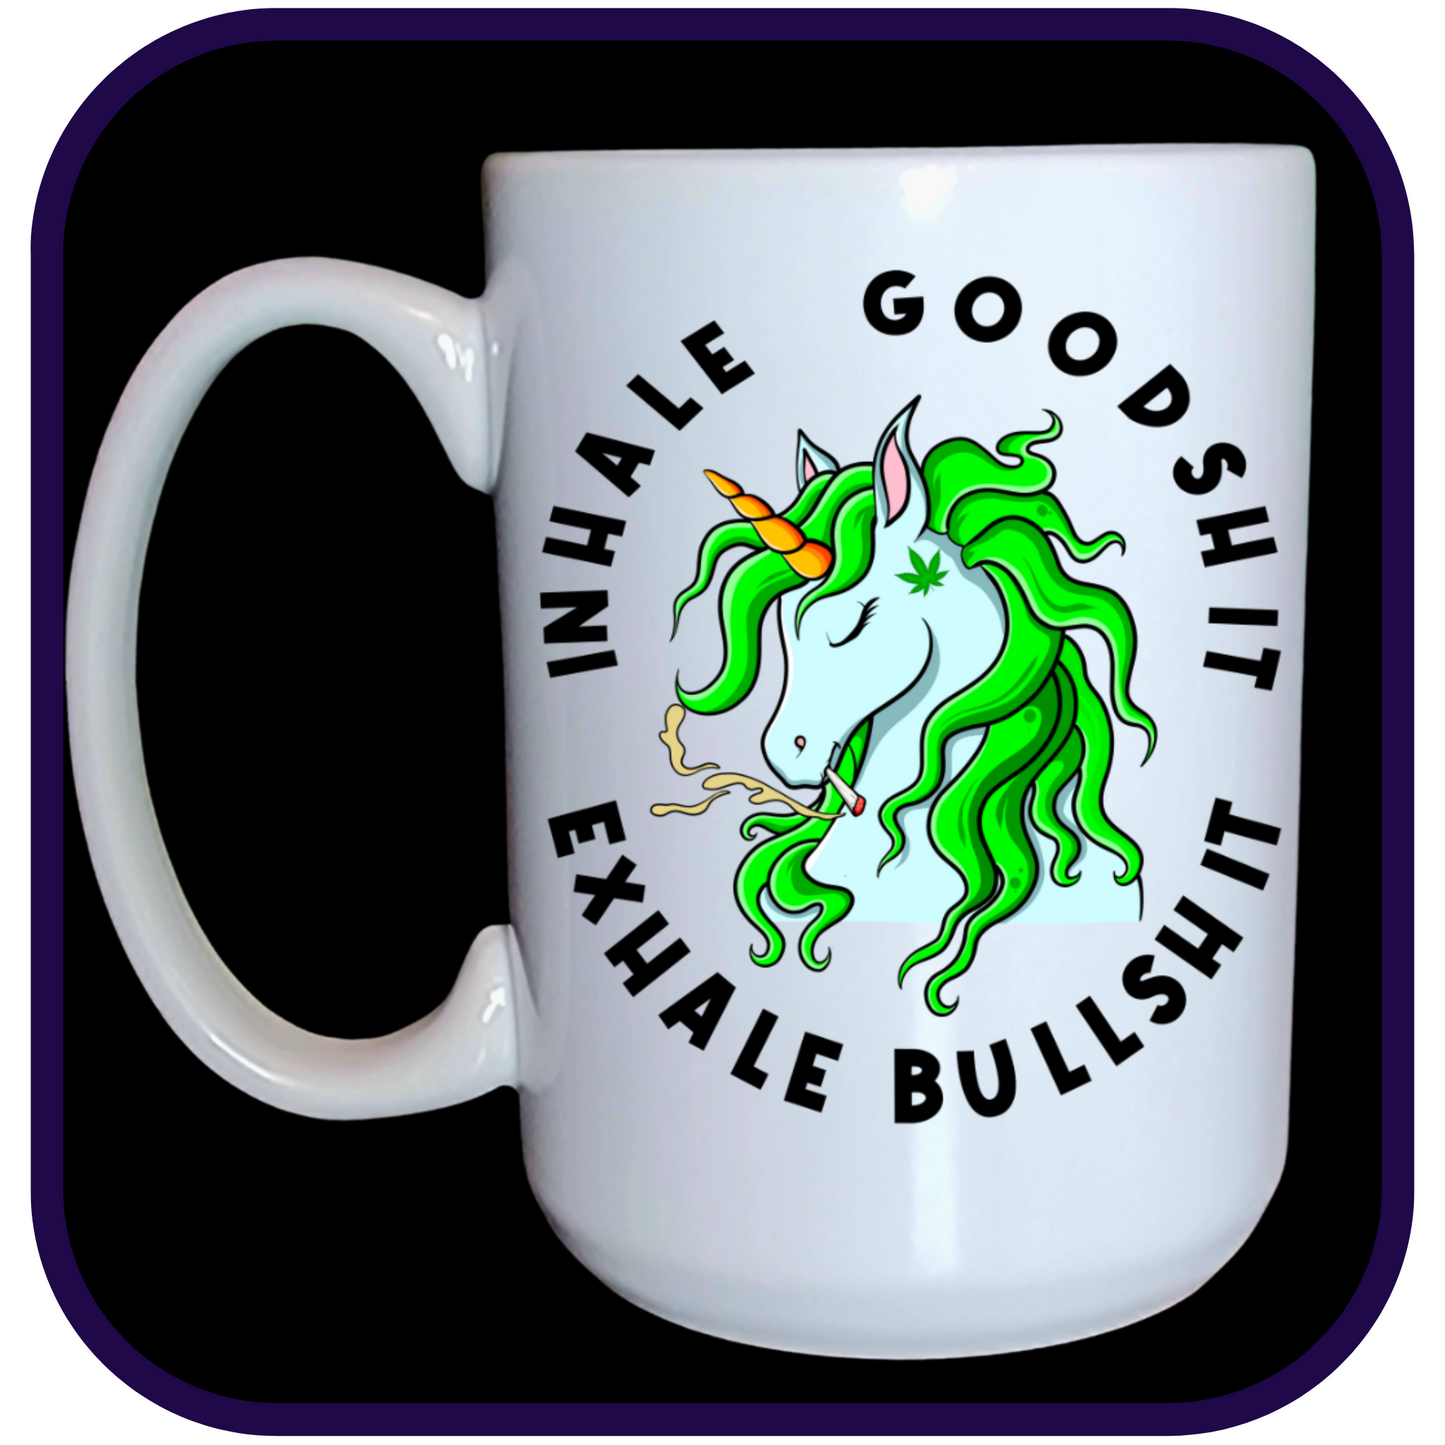 Inhale Goodshit Exhale Bullshit Cannabis Smoking Unicorn V2 - 15oz Ceramic Mug